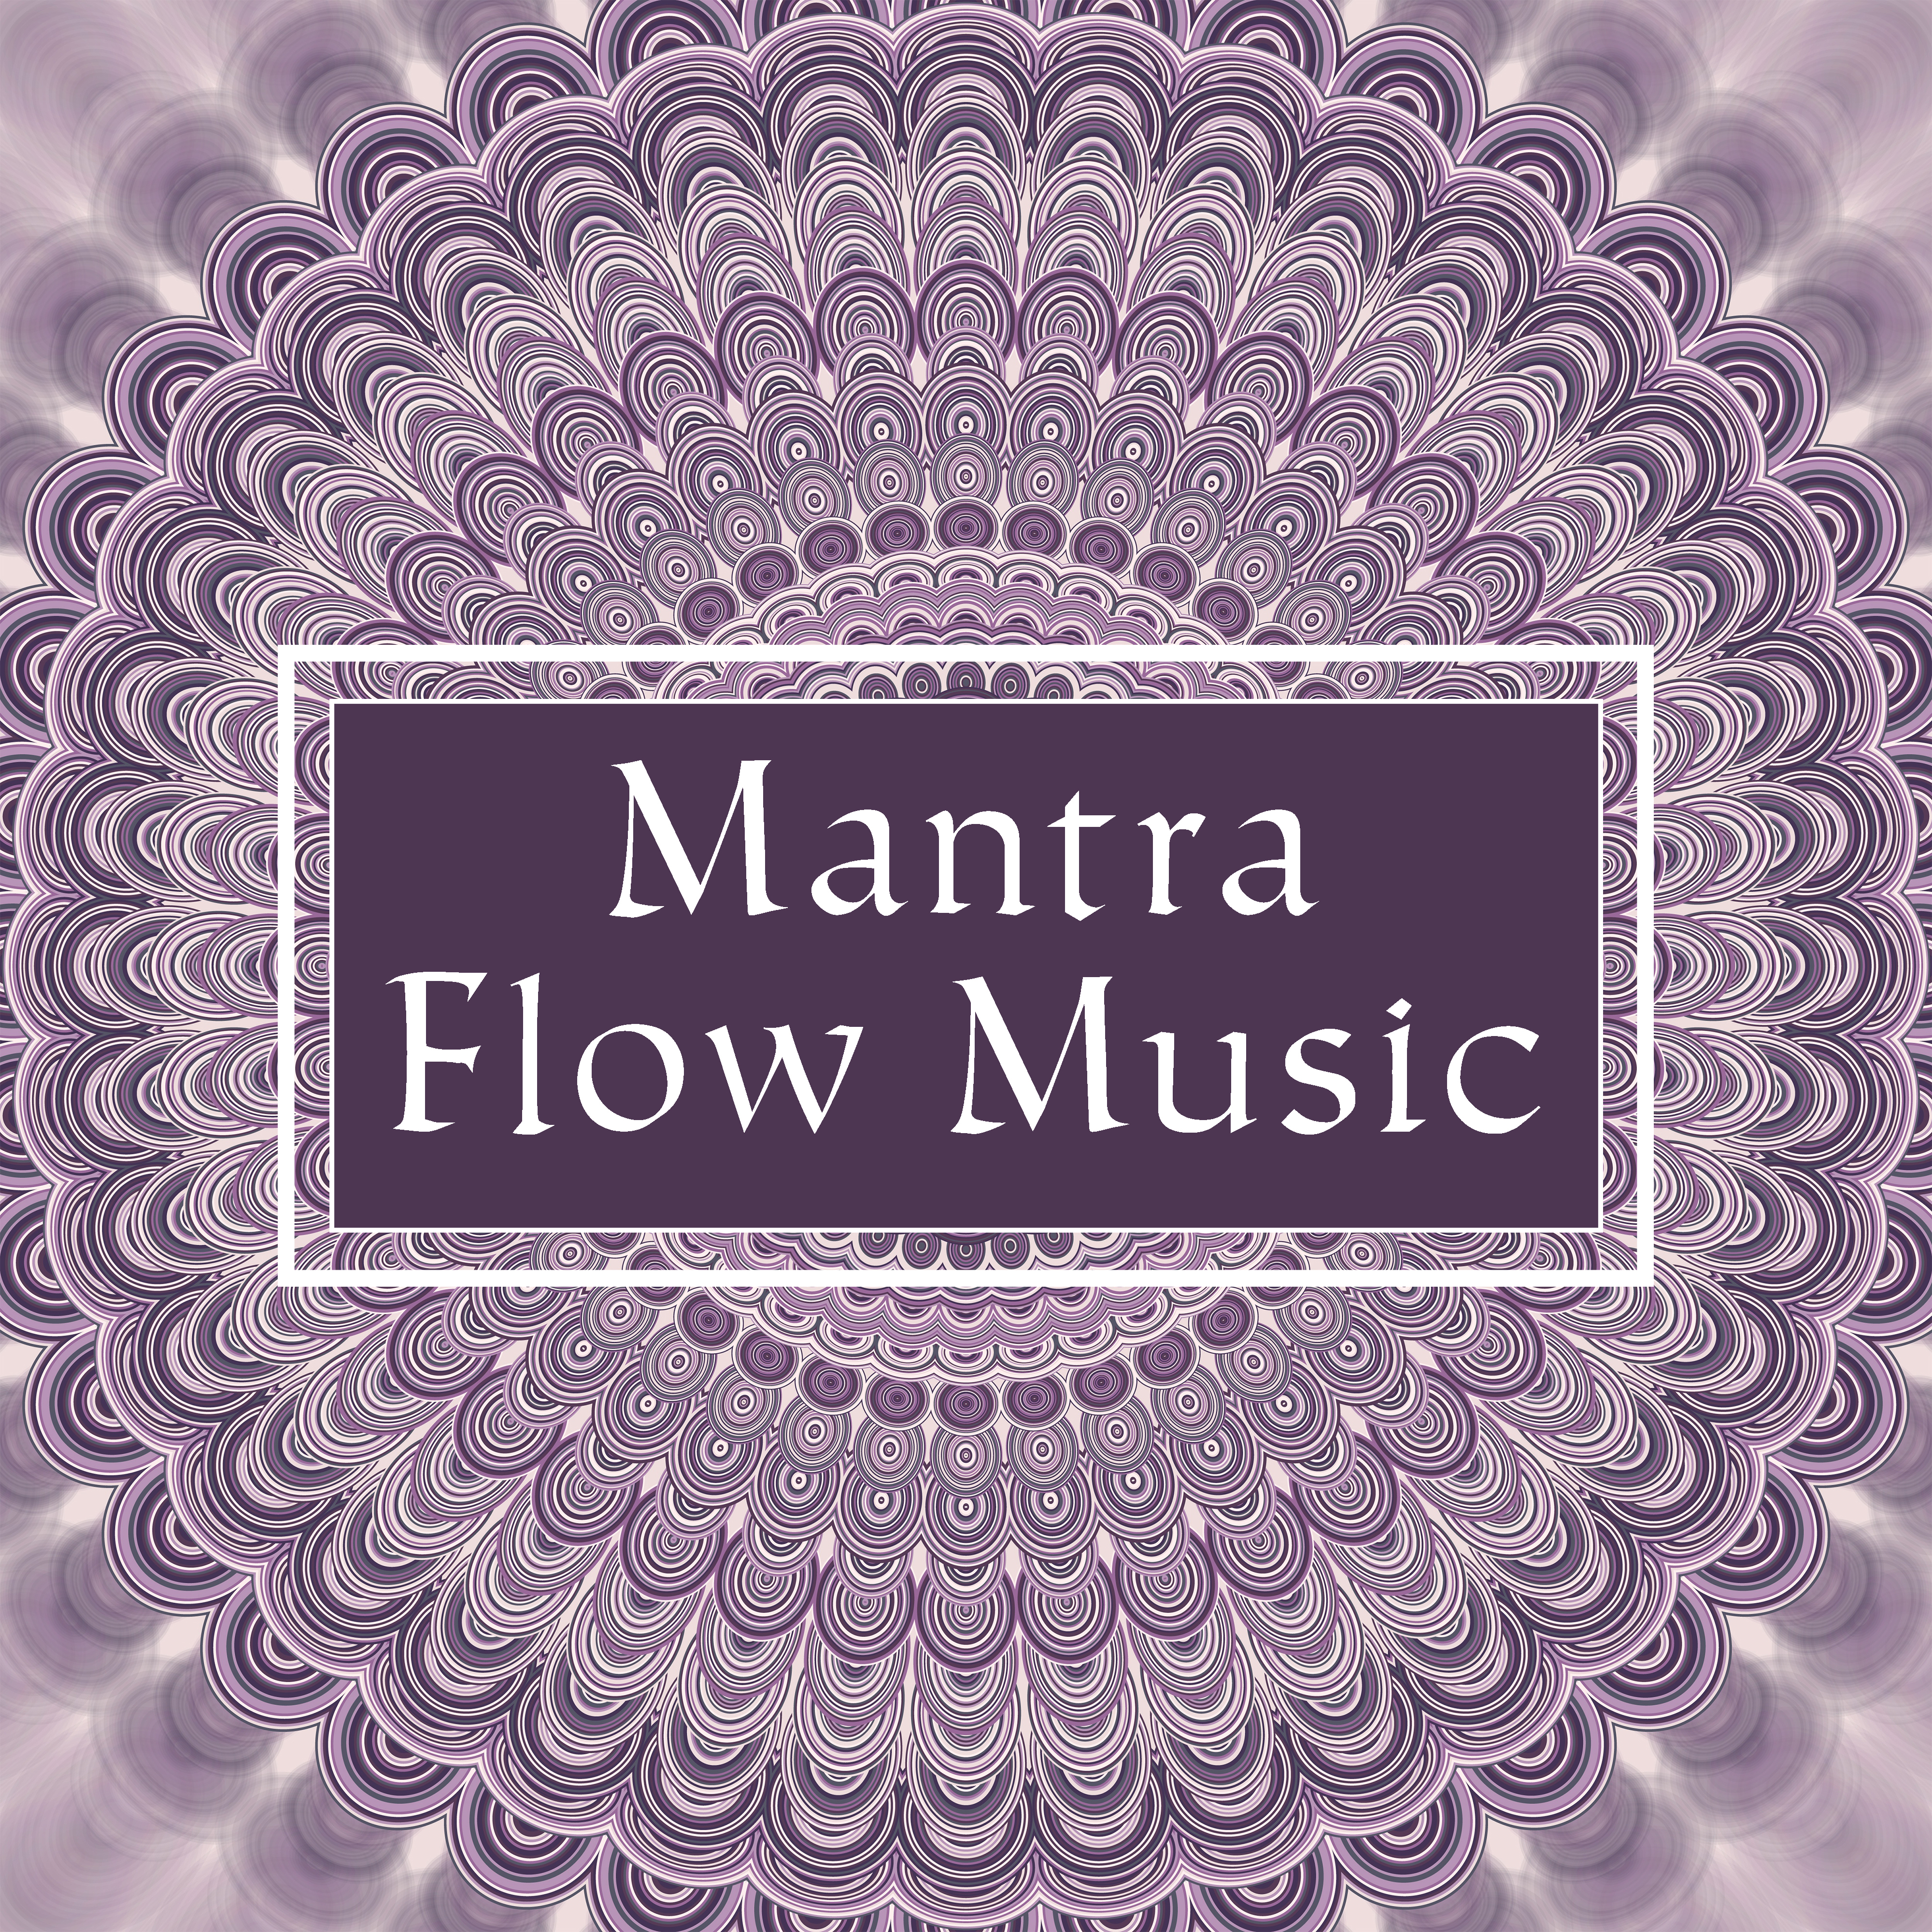 Mantra Flow Music